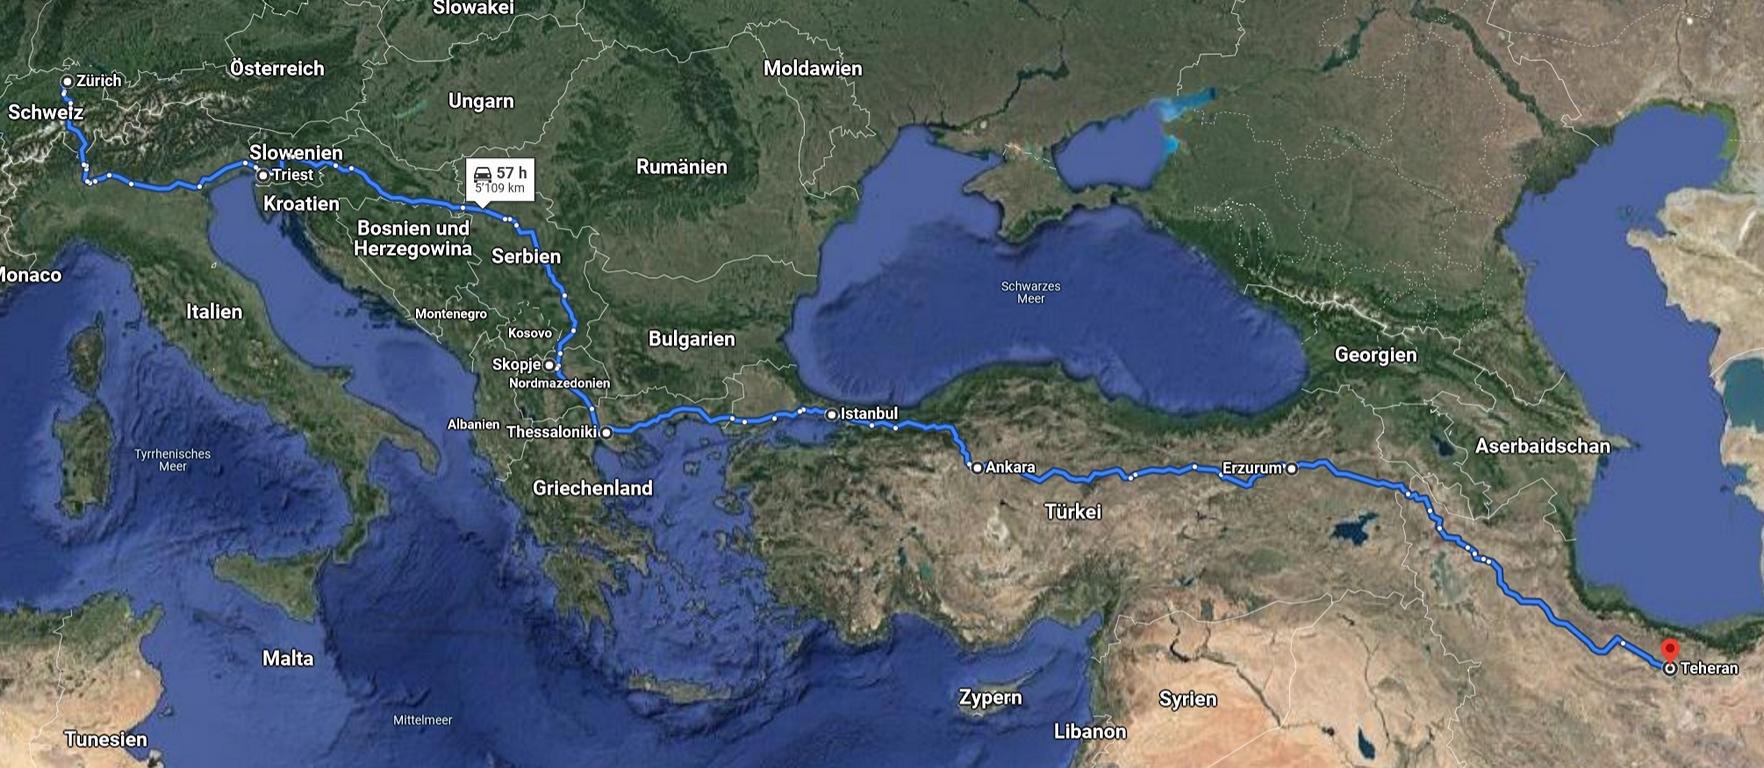 Route Part 1: from Zurich to Tehran